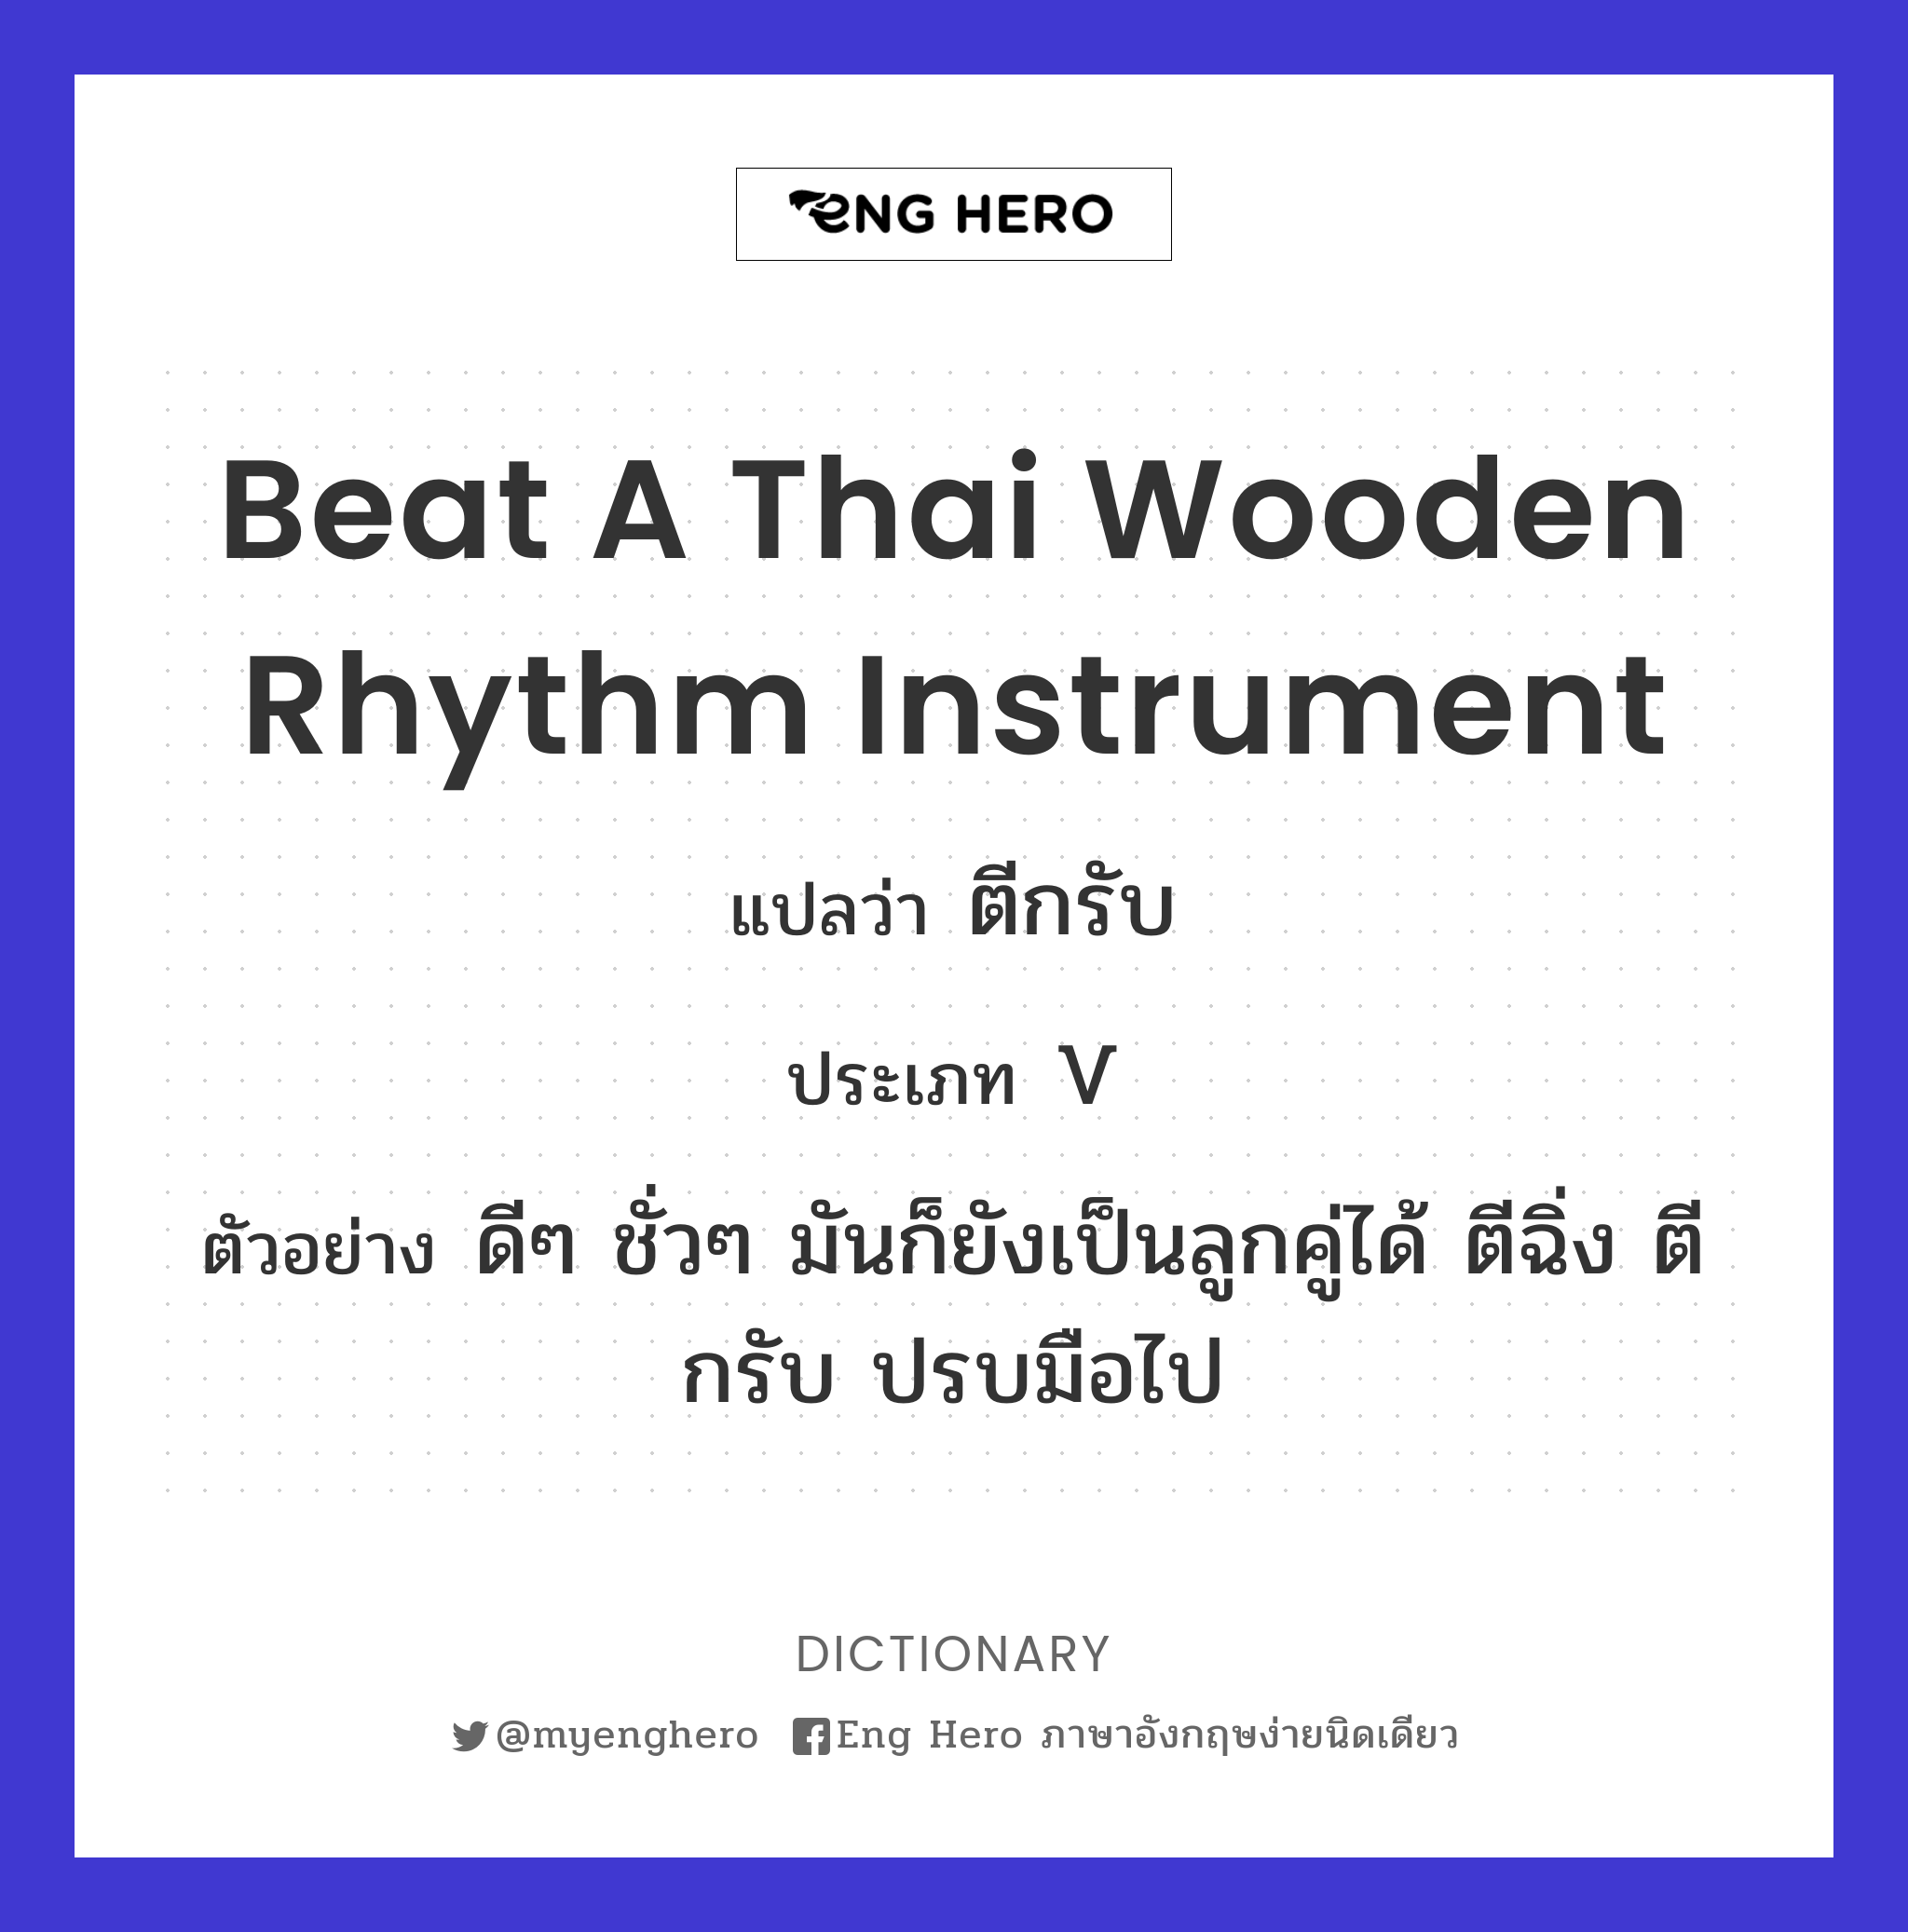 beat a Thai wooden rhythm instrument